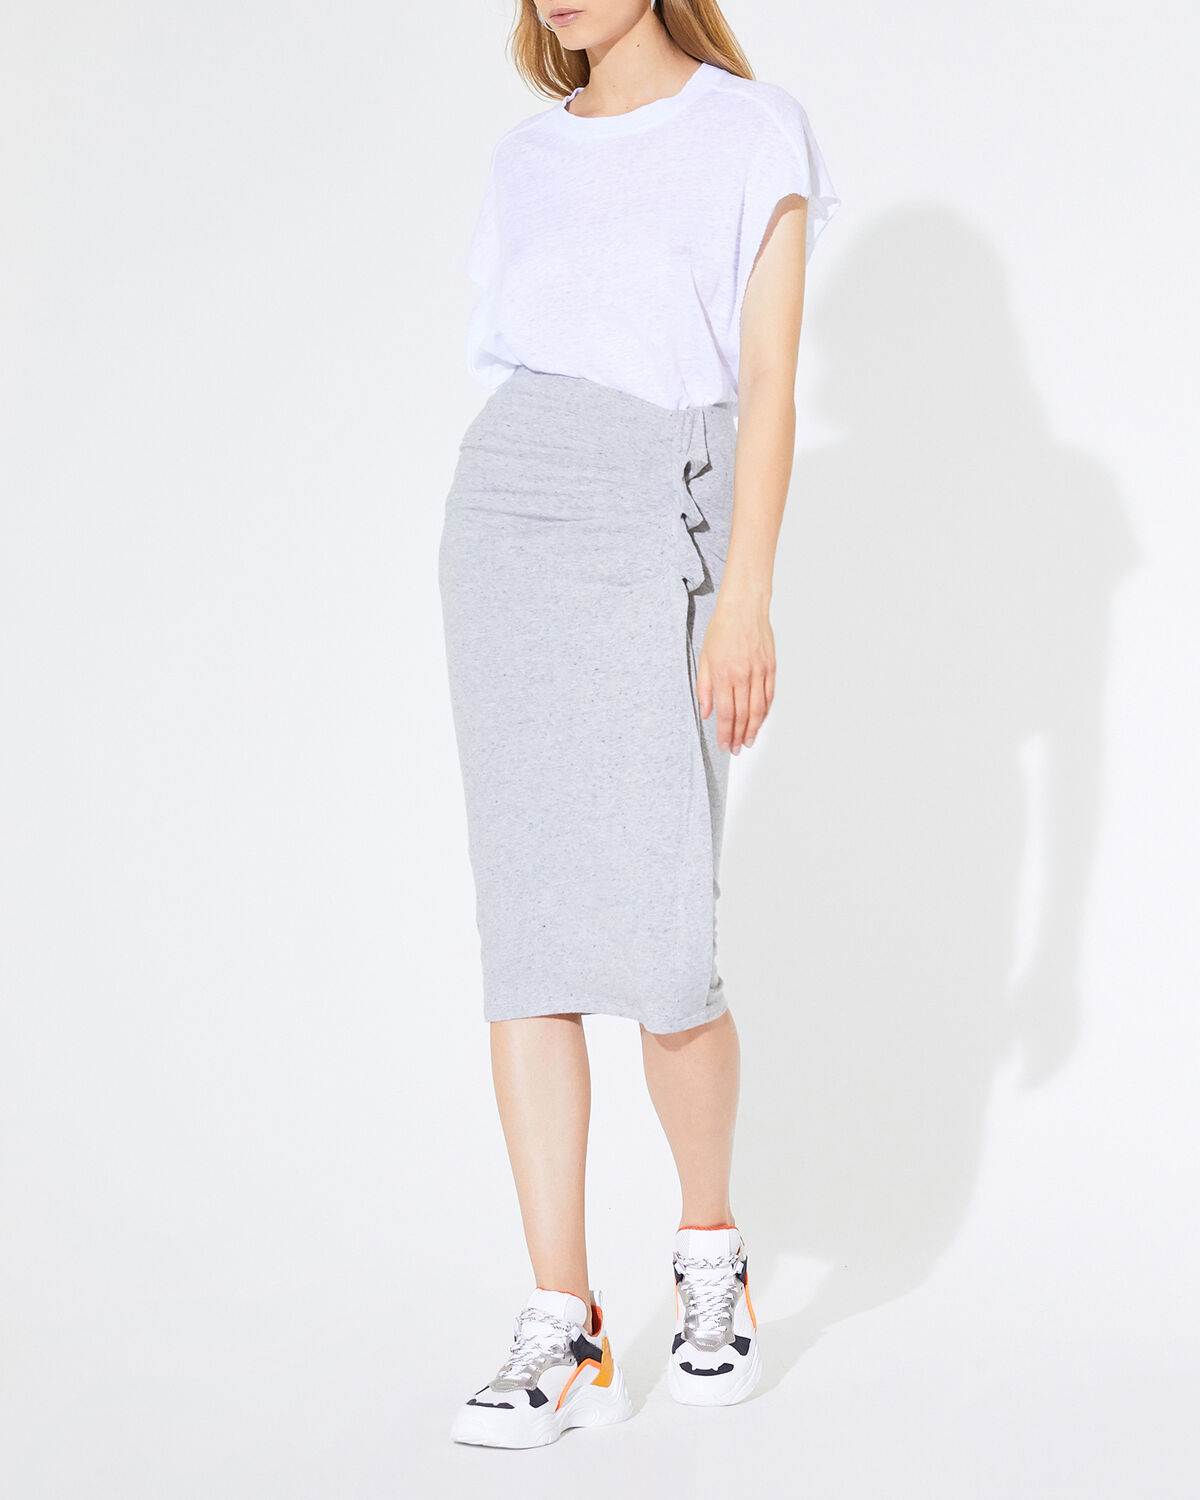 Wilber Long Skirt Mixed Grey by IRO Paris